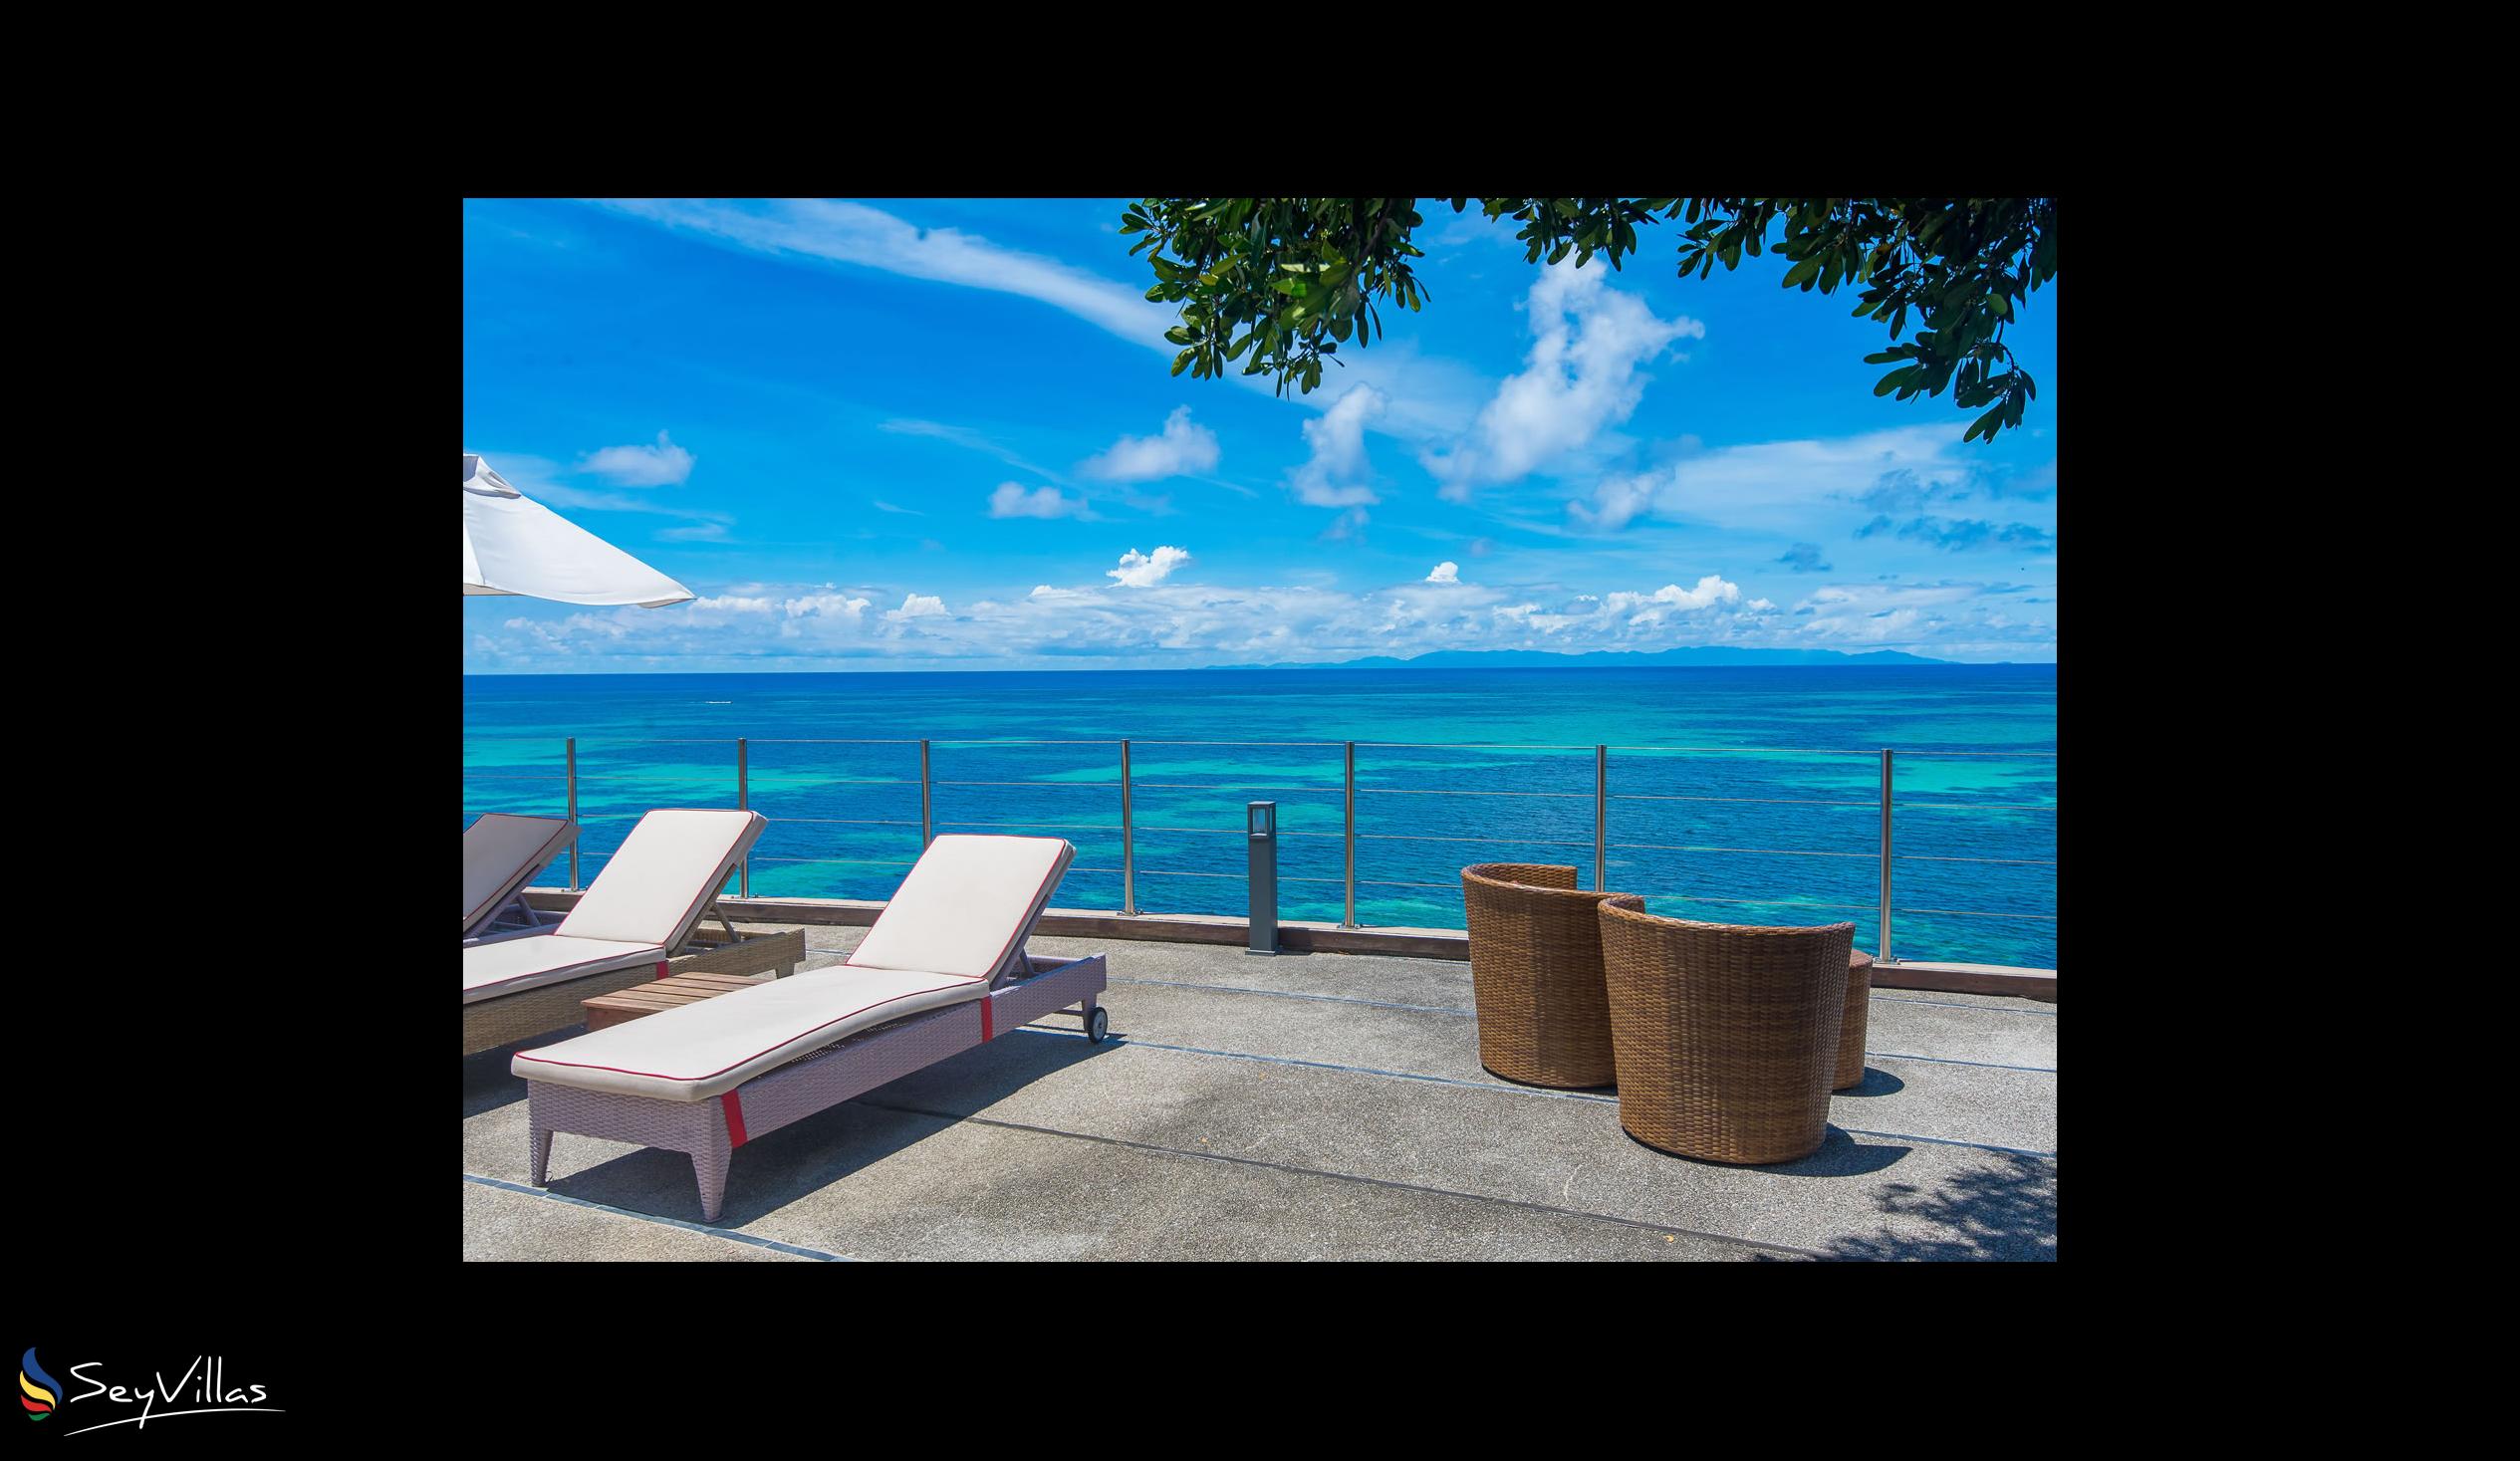 Photo 13: Coco de Mer & Black Parrot Suites - Outdoor area - Praslin (Seychelles)